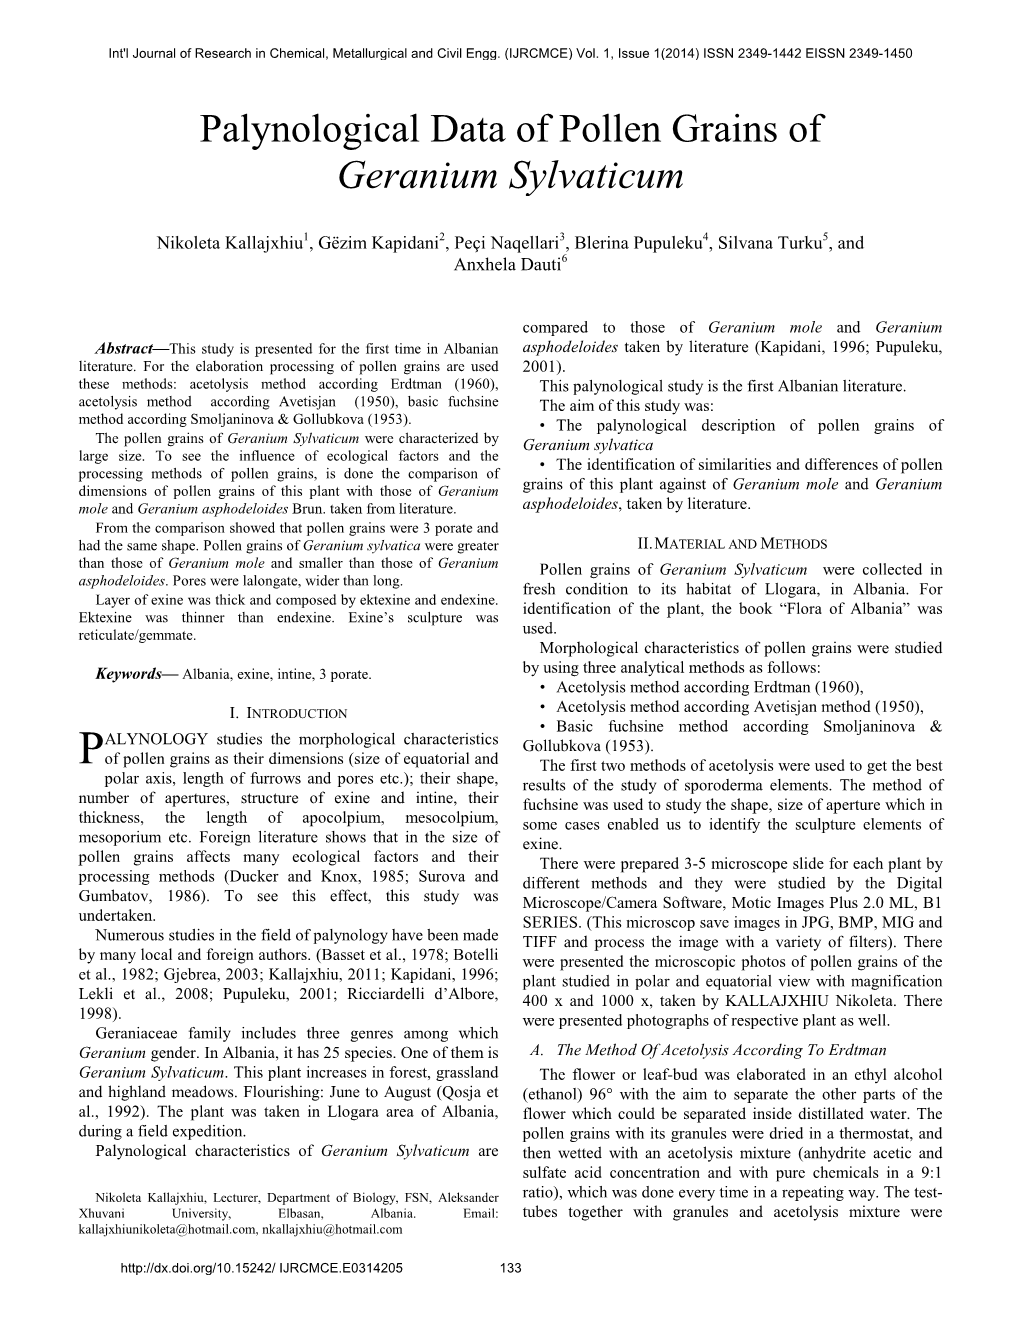 Palynological Data of Pollen Grains of Geranium Sylvaticum